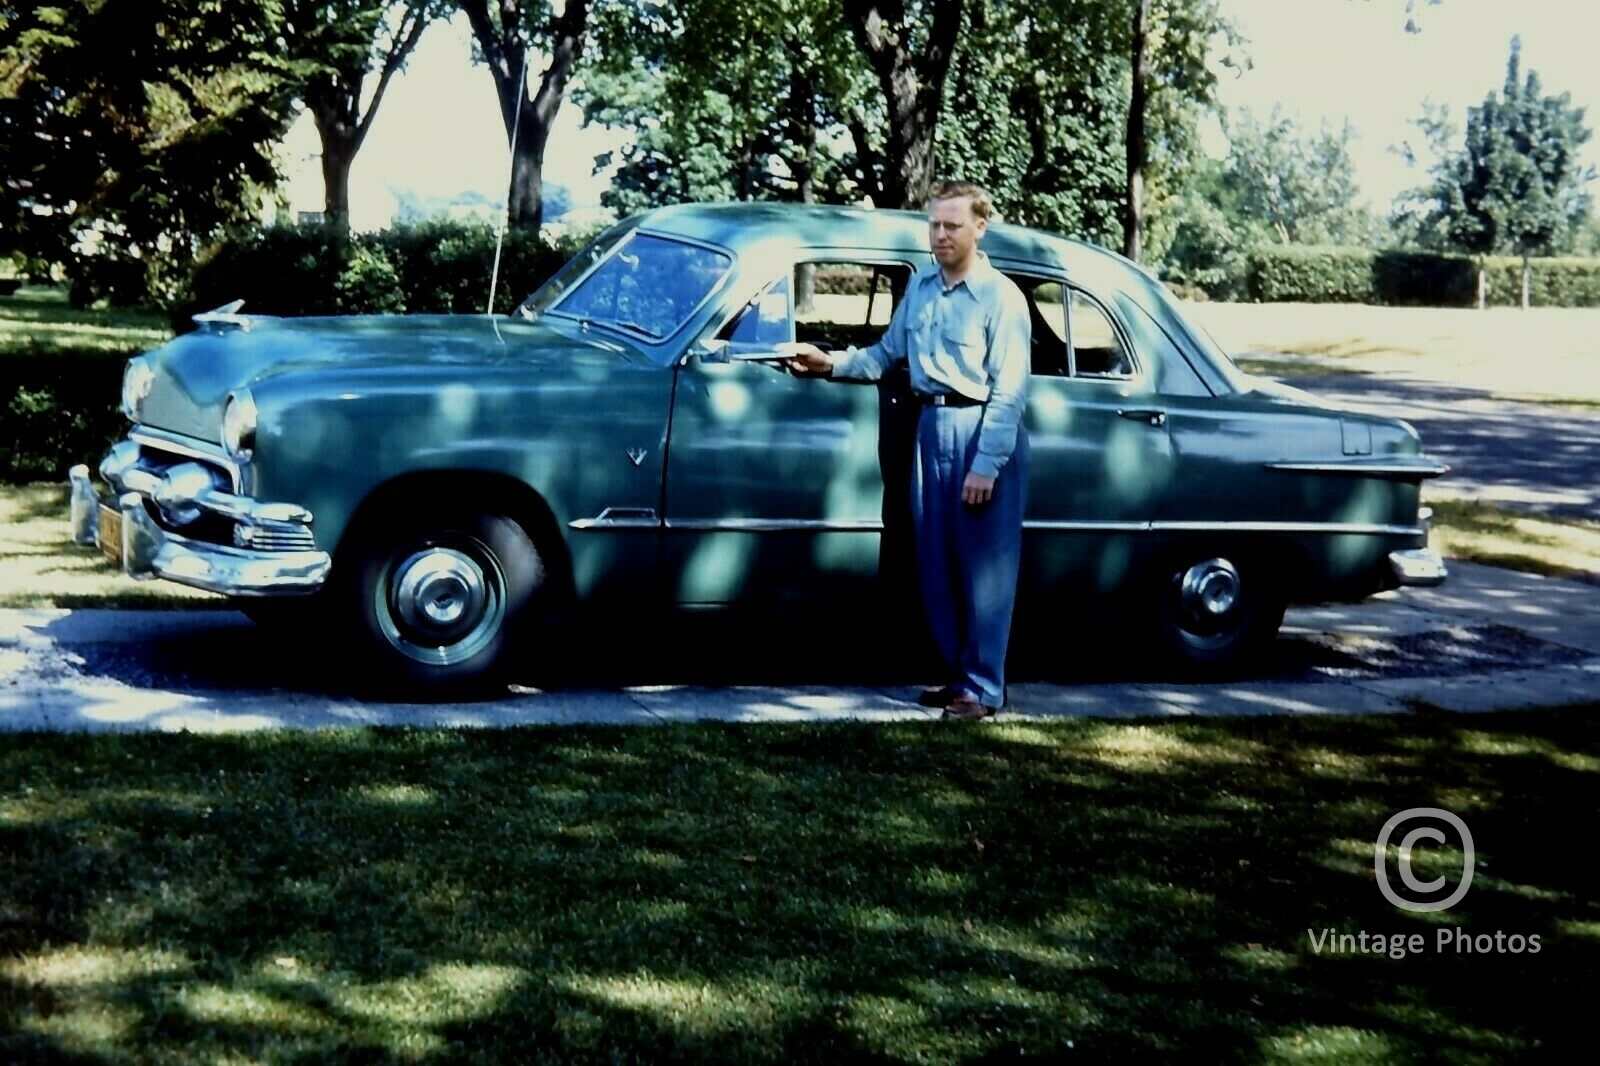 1952 American Classic Car & Man Standing